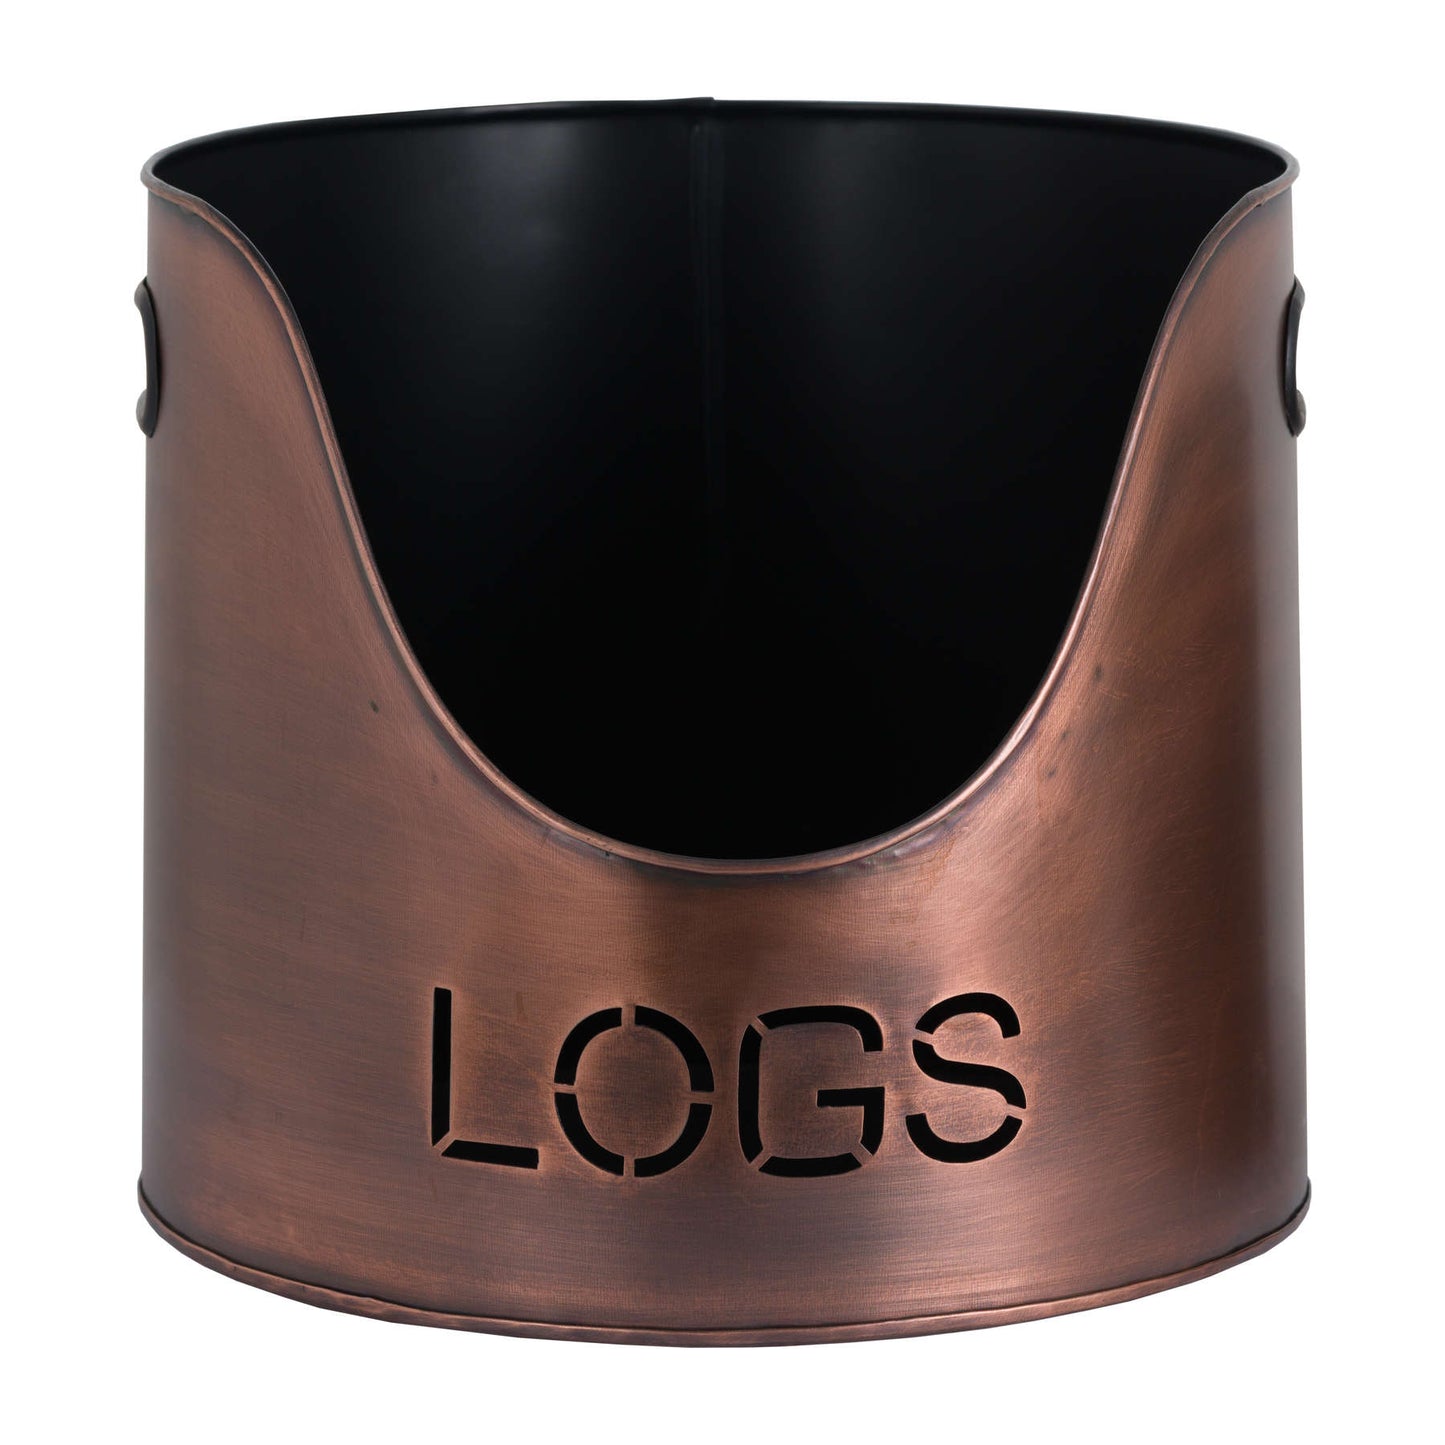 Copper Logs & Kindling Buckets & Matchstick Holder Set